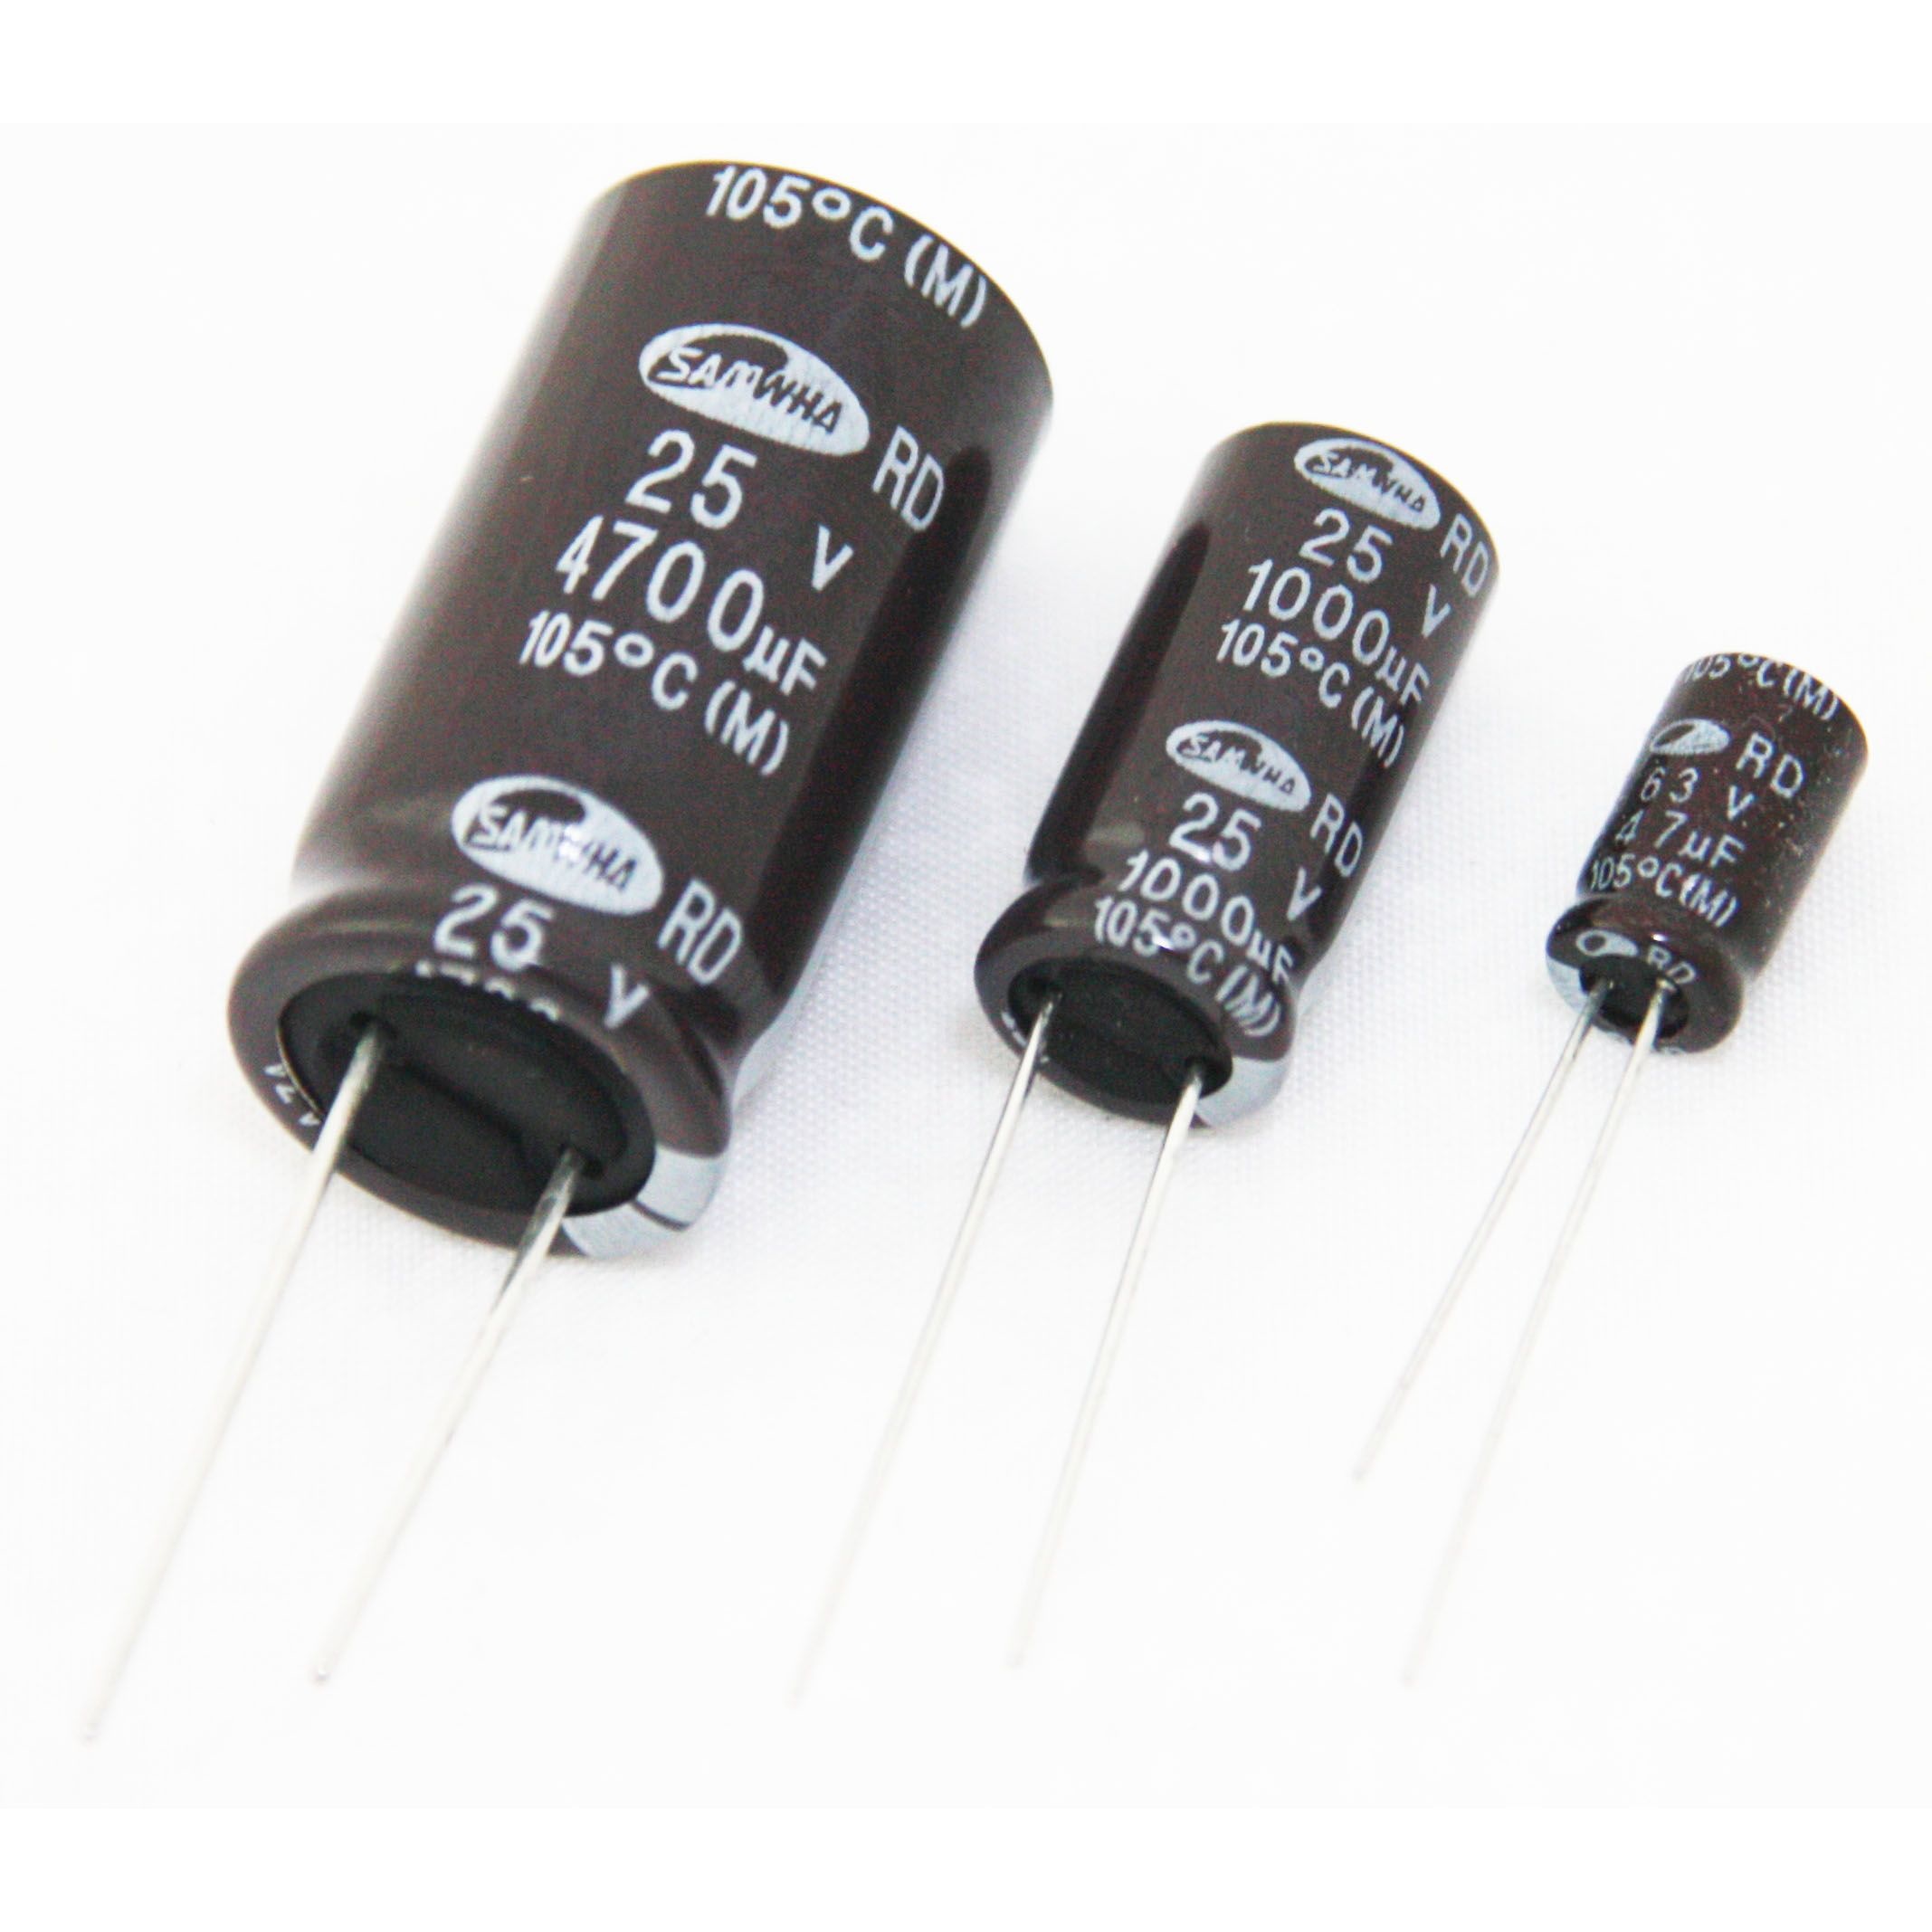 Electrolytic capacitor 105° 3300uF-10V